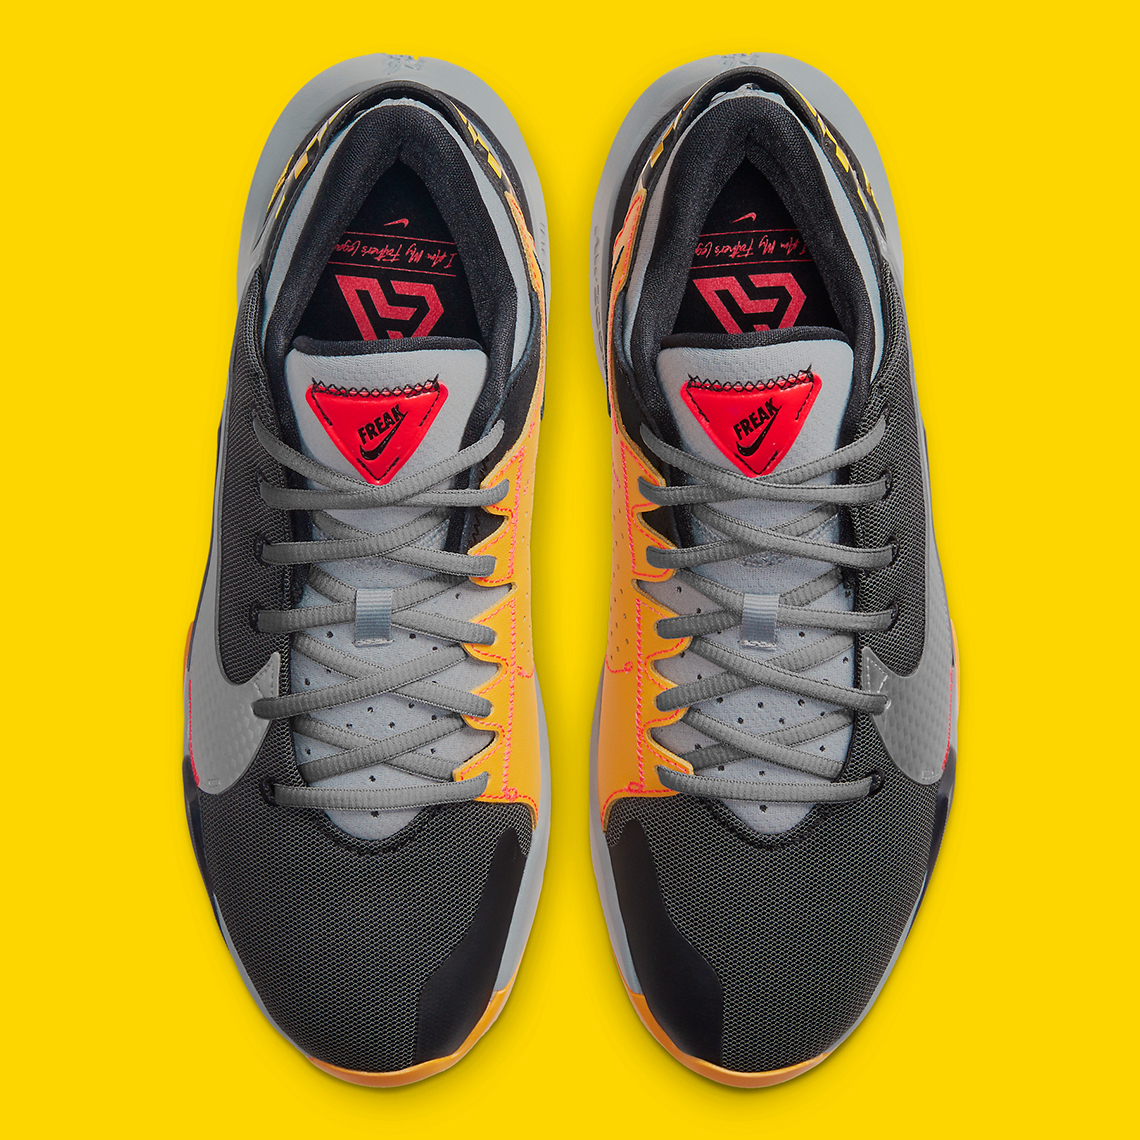 B/R Kicks - Giannis wearing the Nike Zoom Freak 2 “Oregon”